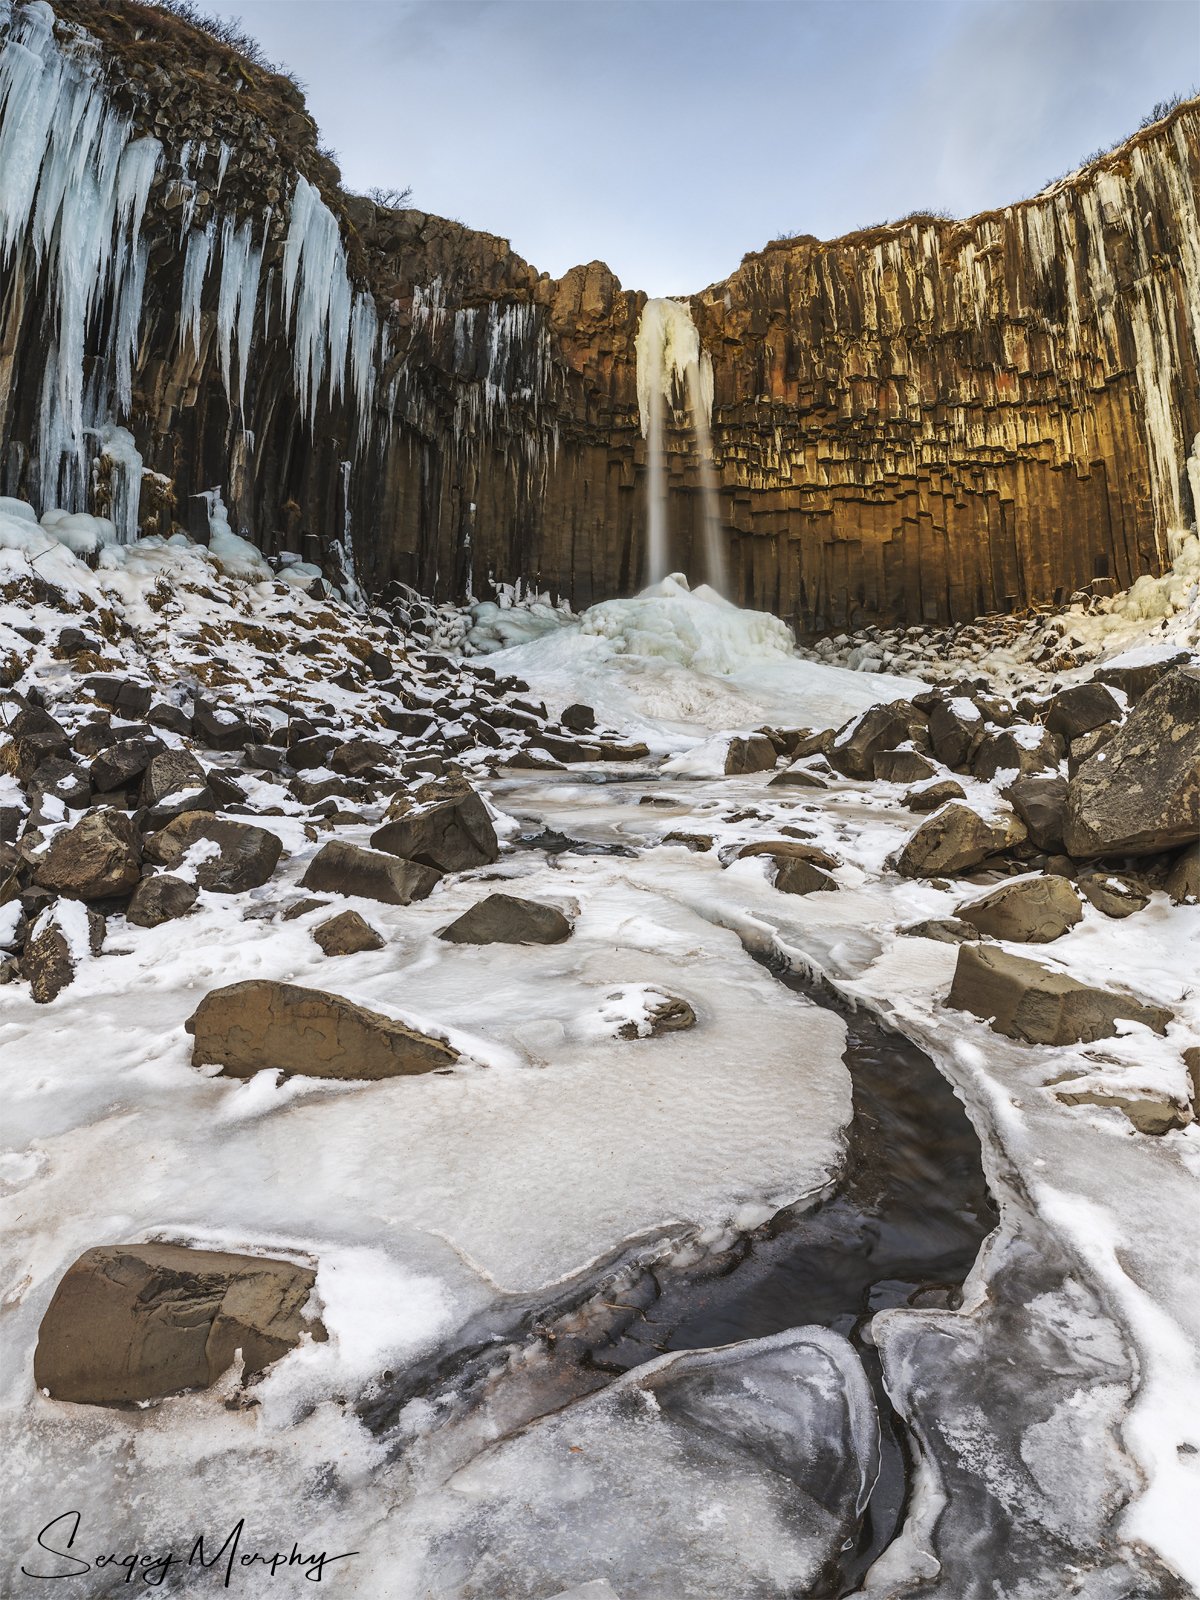 waterfall svartioss iceland, Sergey Merphy